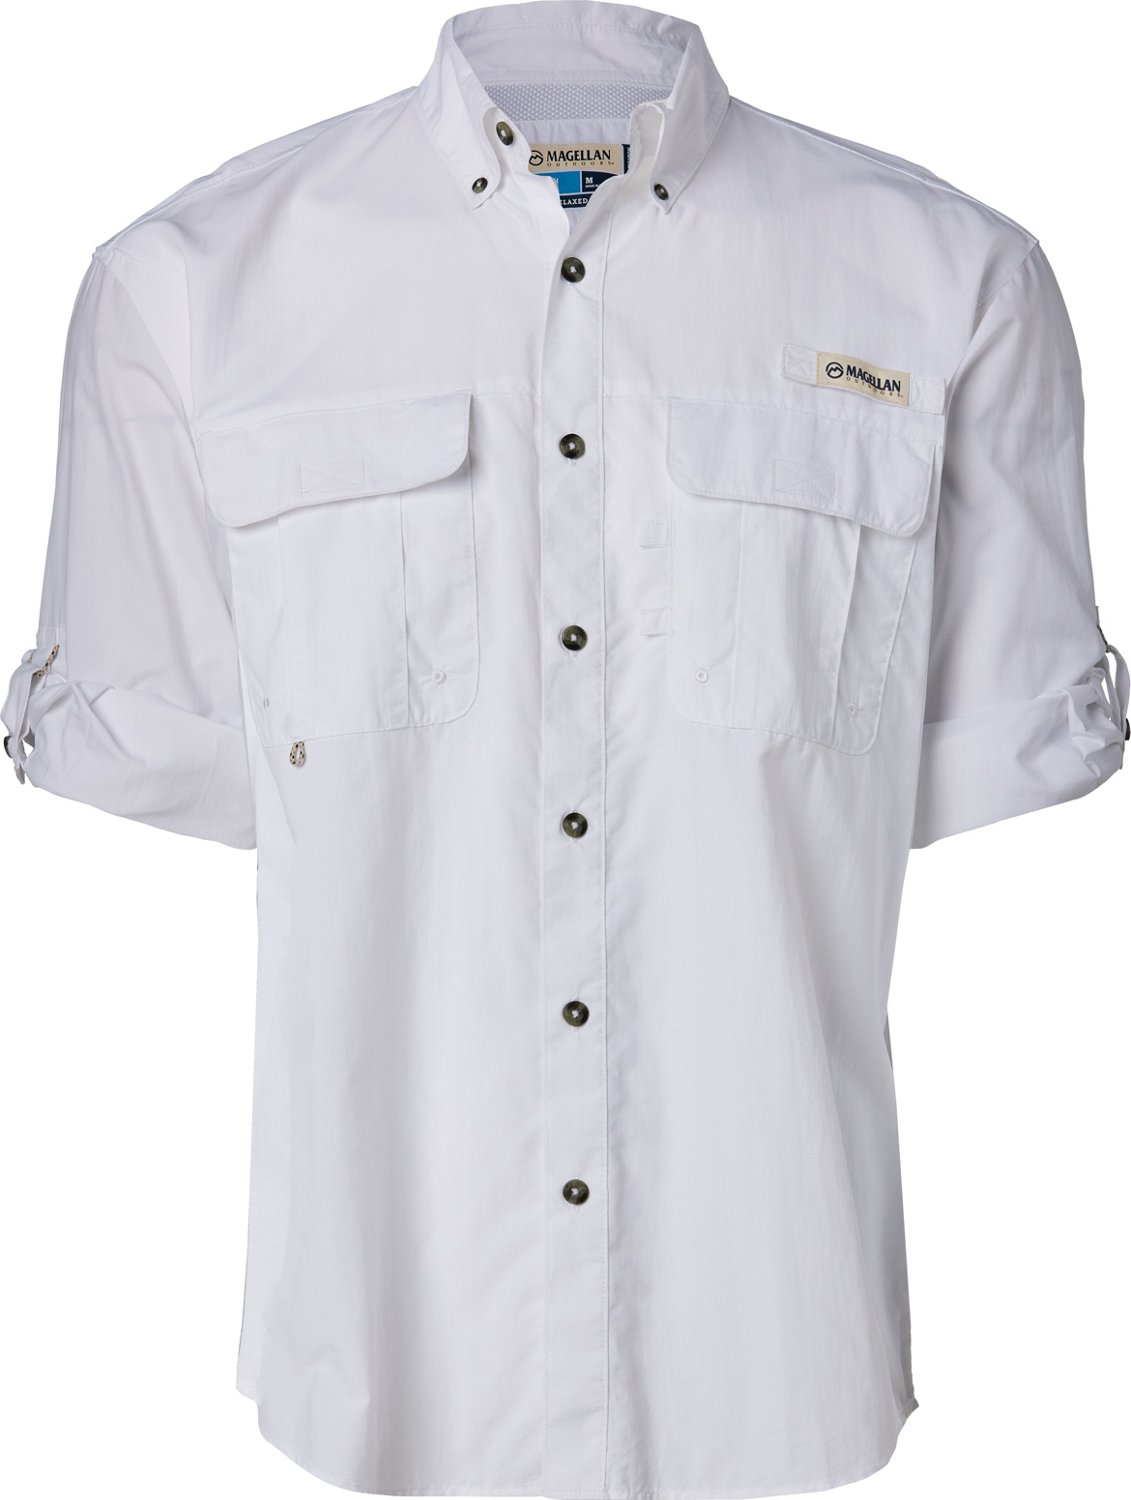 Magellan Outdoors Laguna Madre White Short Sleeve Fishing Shirt Size 1X /  XL Men